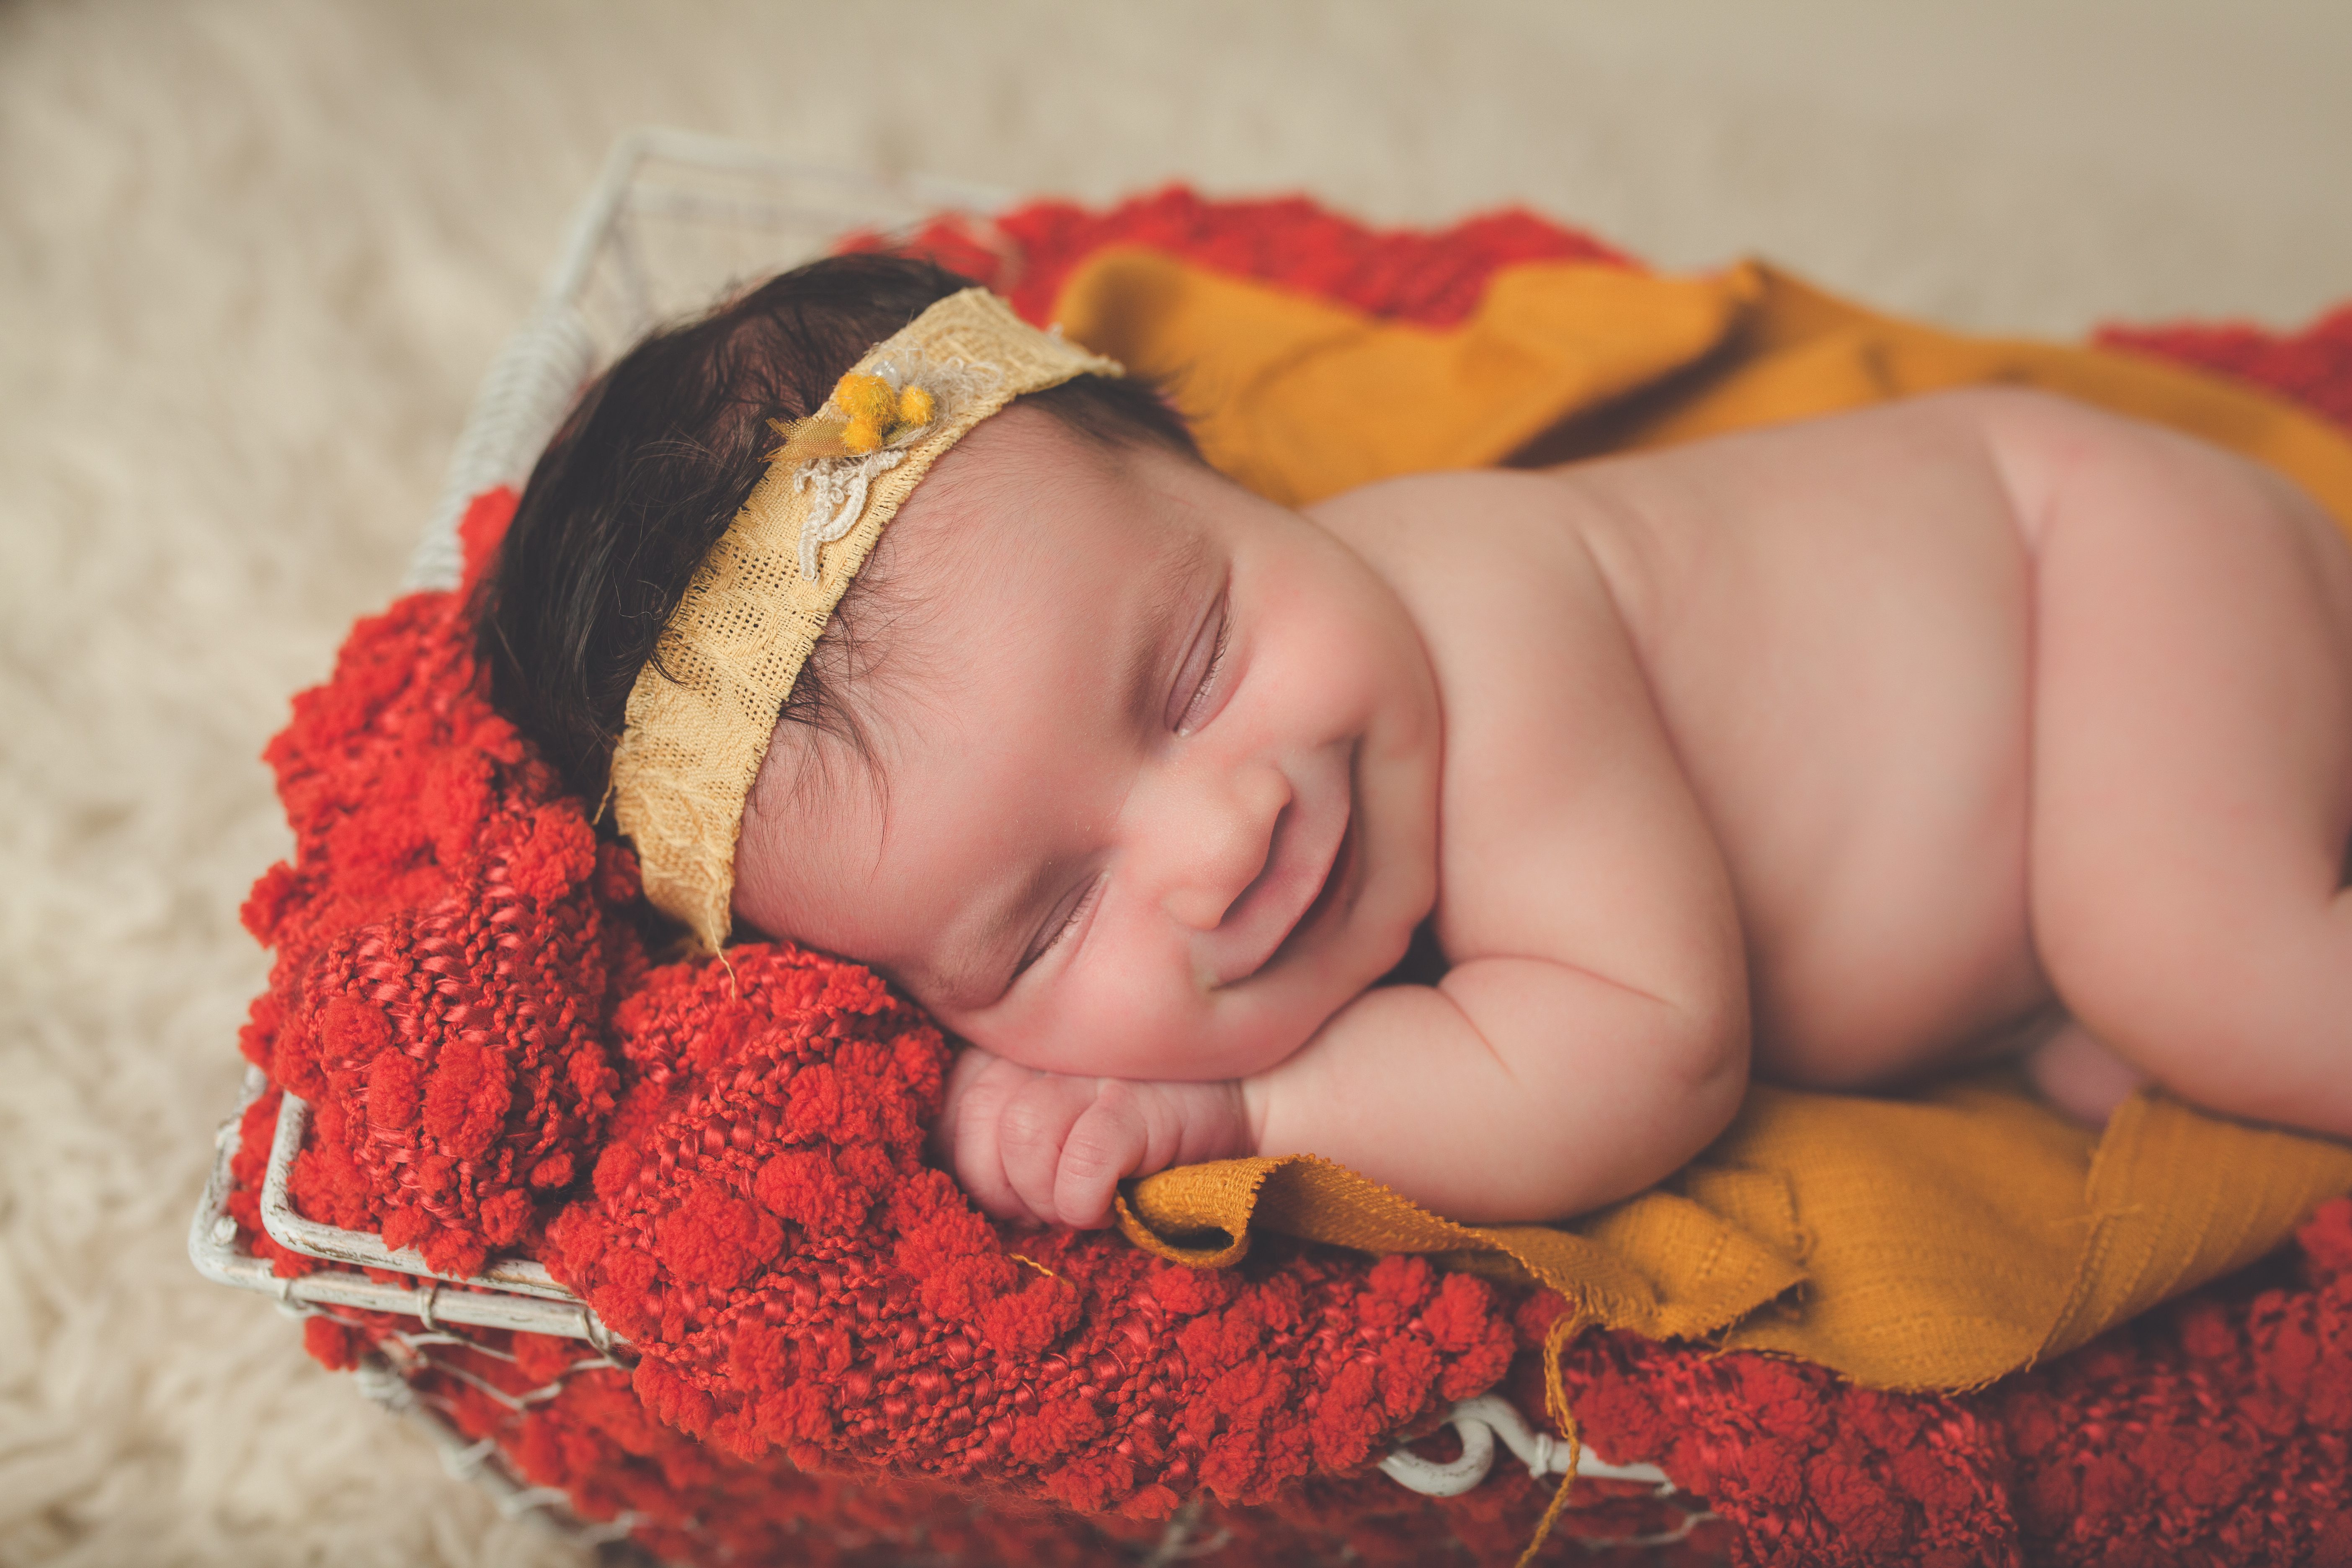 newborn posed smiling in basket on red blanket